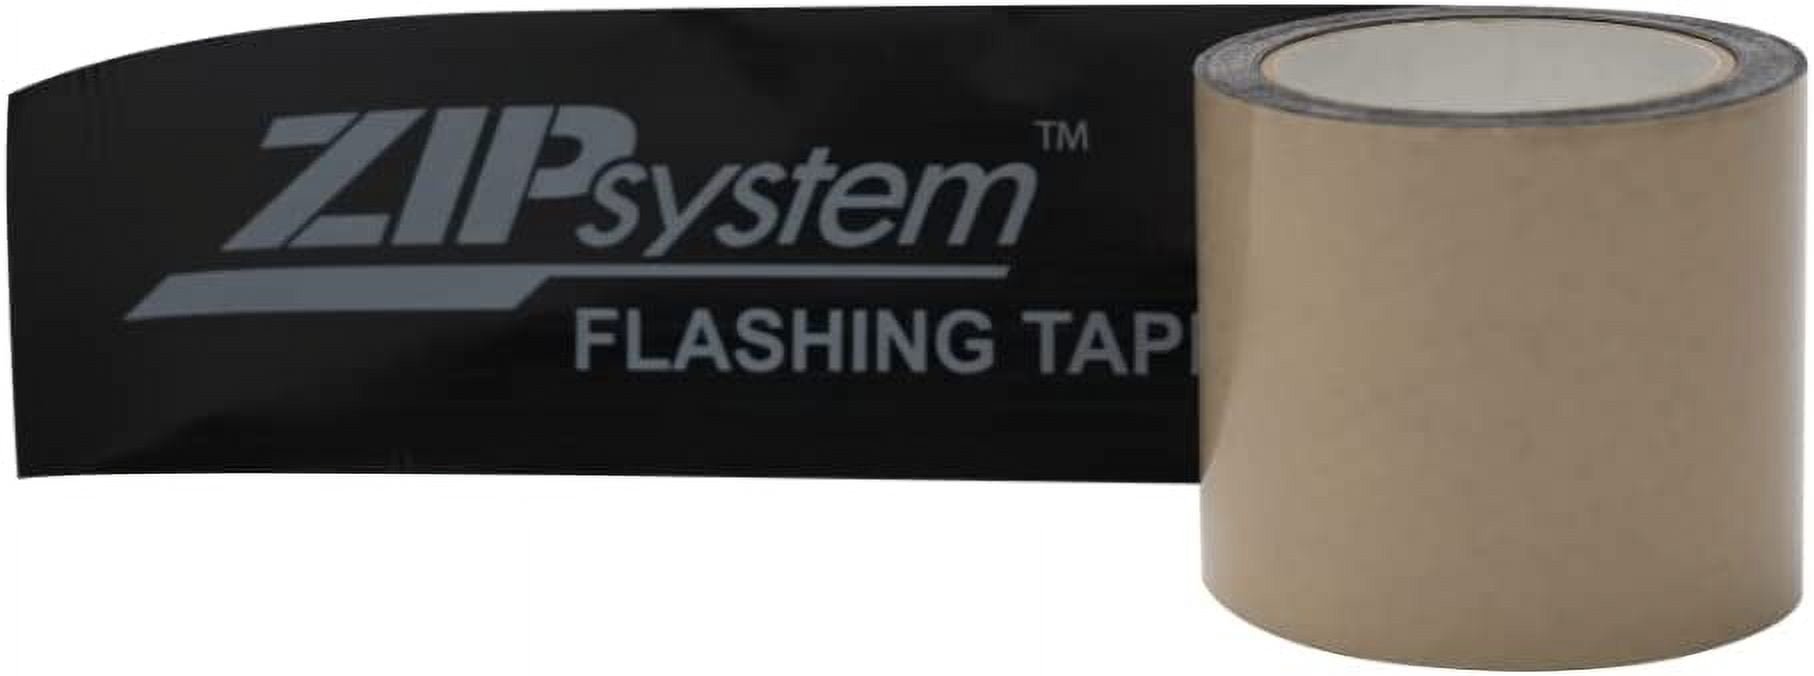 Duragard Huber Zip System Flashing Tape | Self-Adhesive Flashing for  Structural Panels, Doors-Windows Rough Openings | 3.75 in x 90 ft